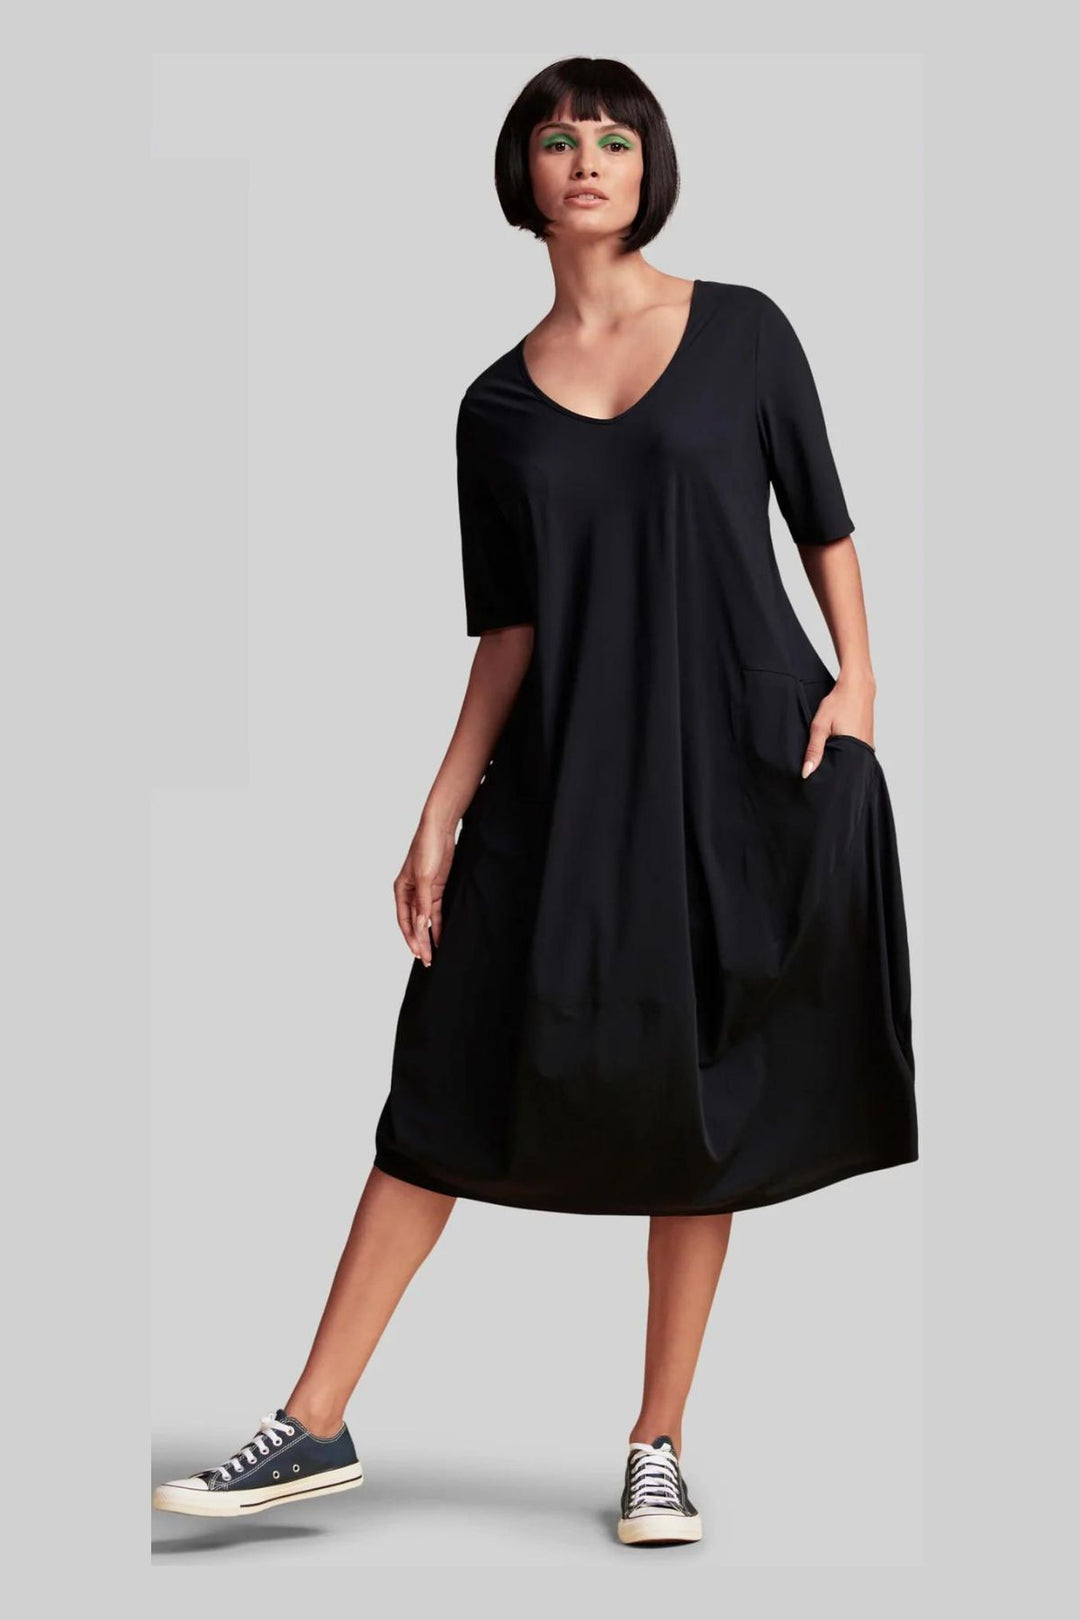 Scoop V ½ Sleeve Tulip Dress (Black)